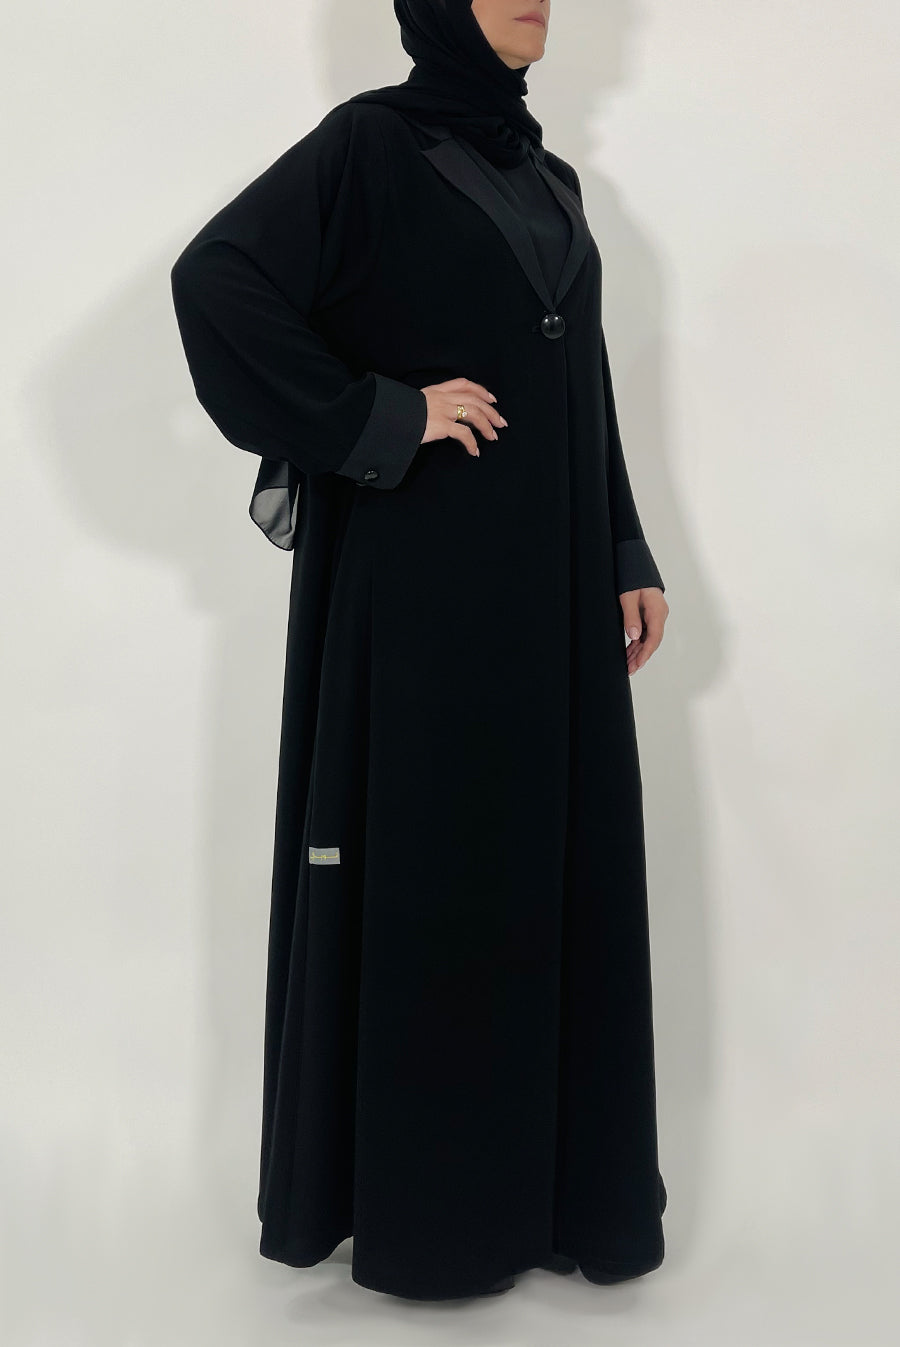 Black collar abaya - thowby dubai - latest trends in abaya